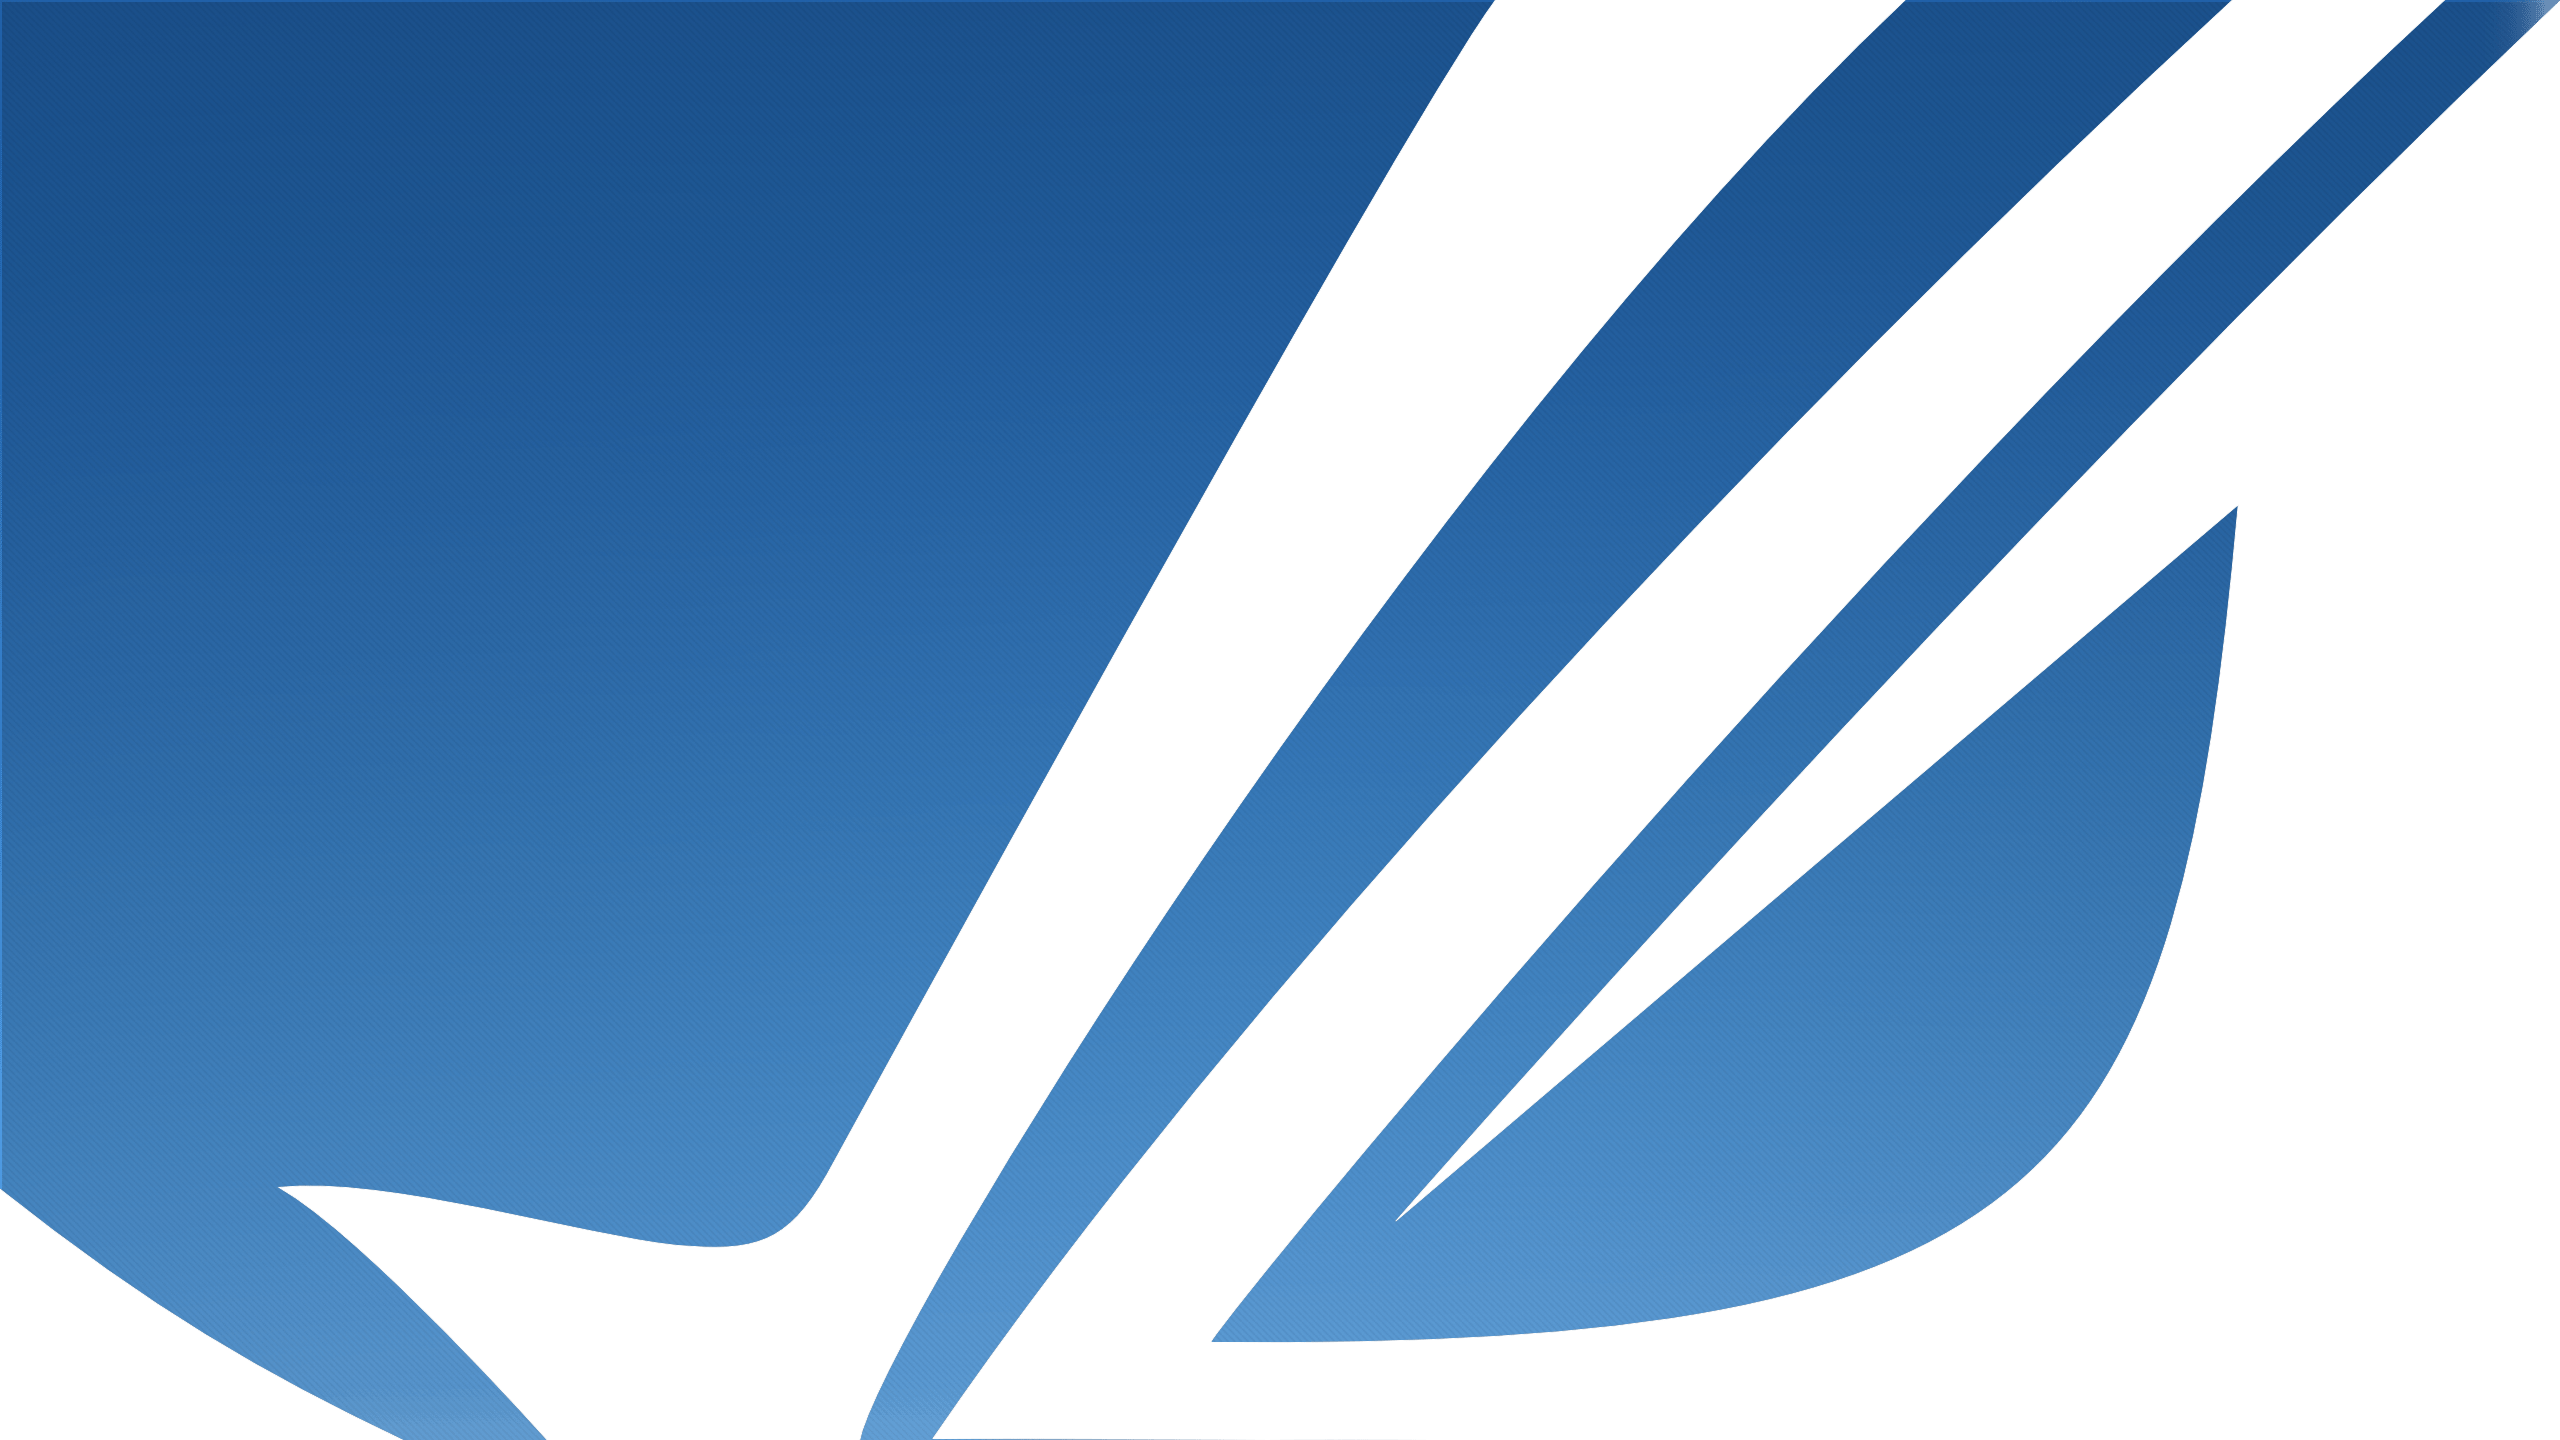 ASUS ROG White Wallpaper. ASUS Blue. ASUS Republic of Gamers logo. Панорама стильный логотип ROG. Обновление рог фон